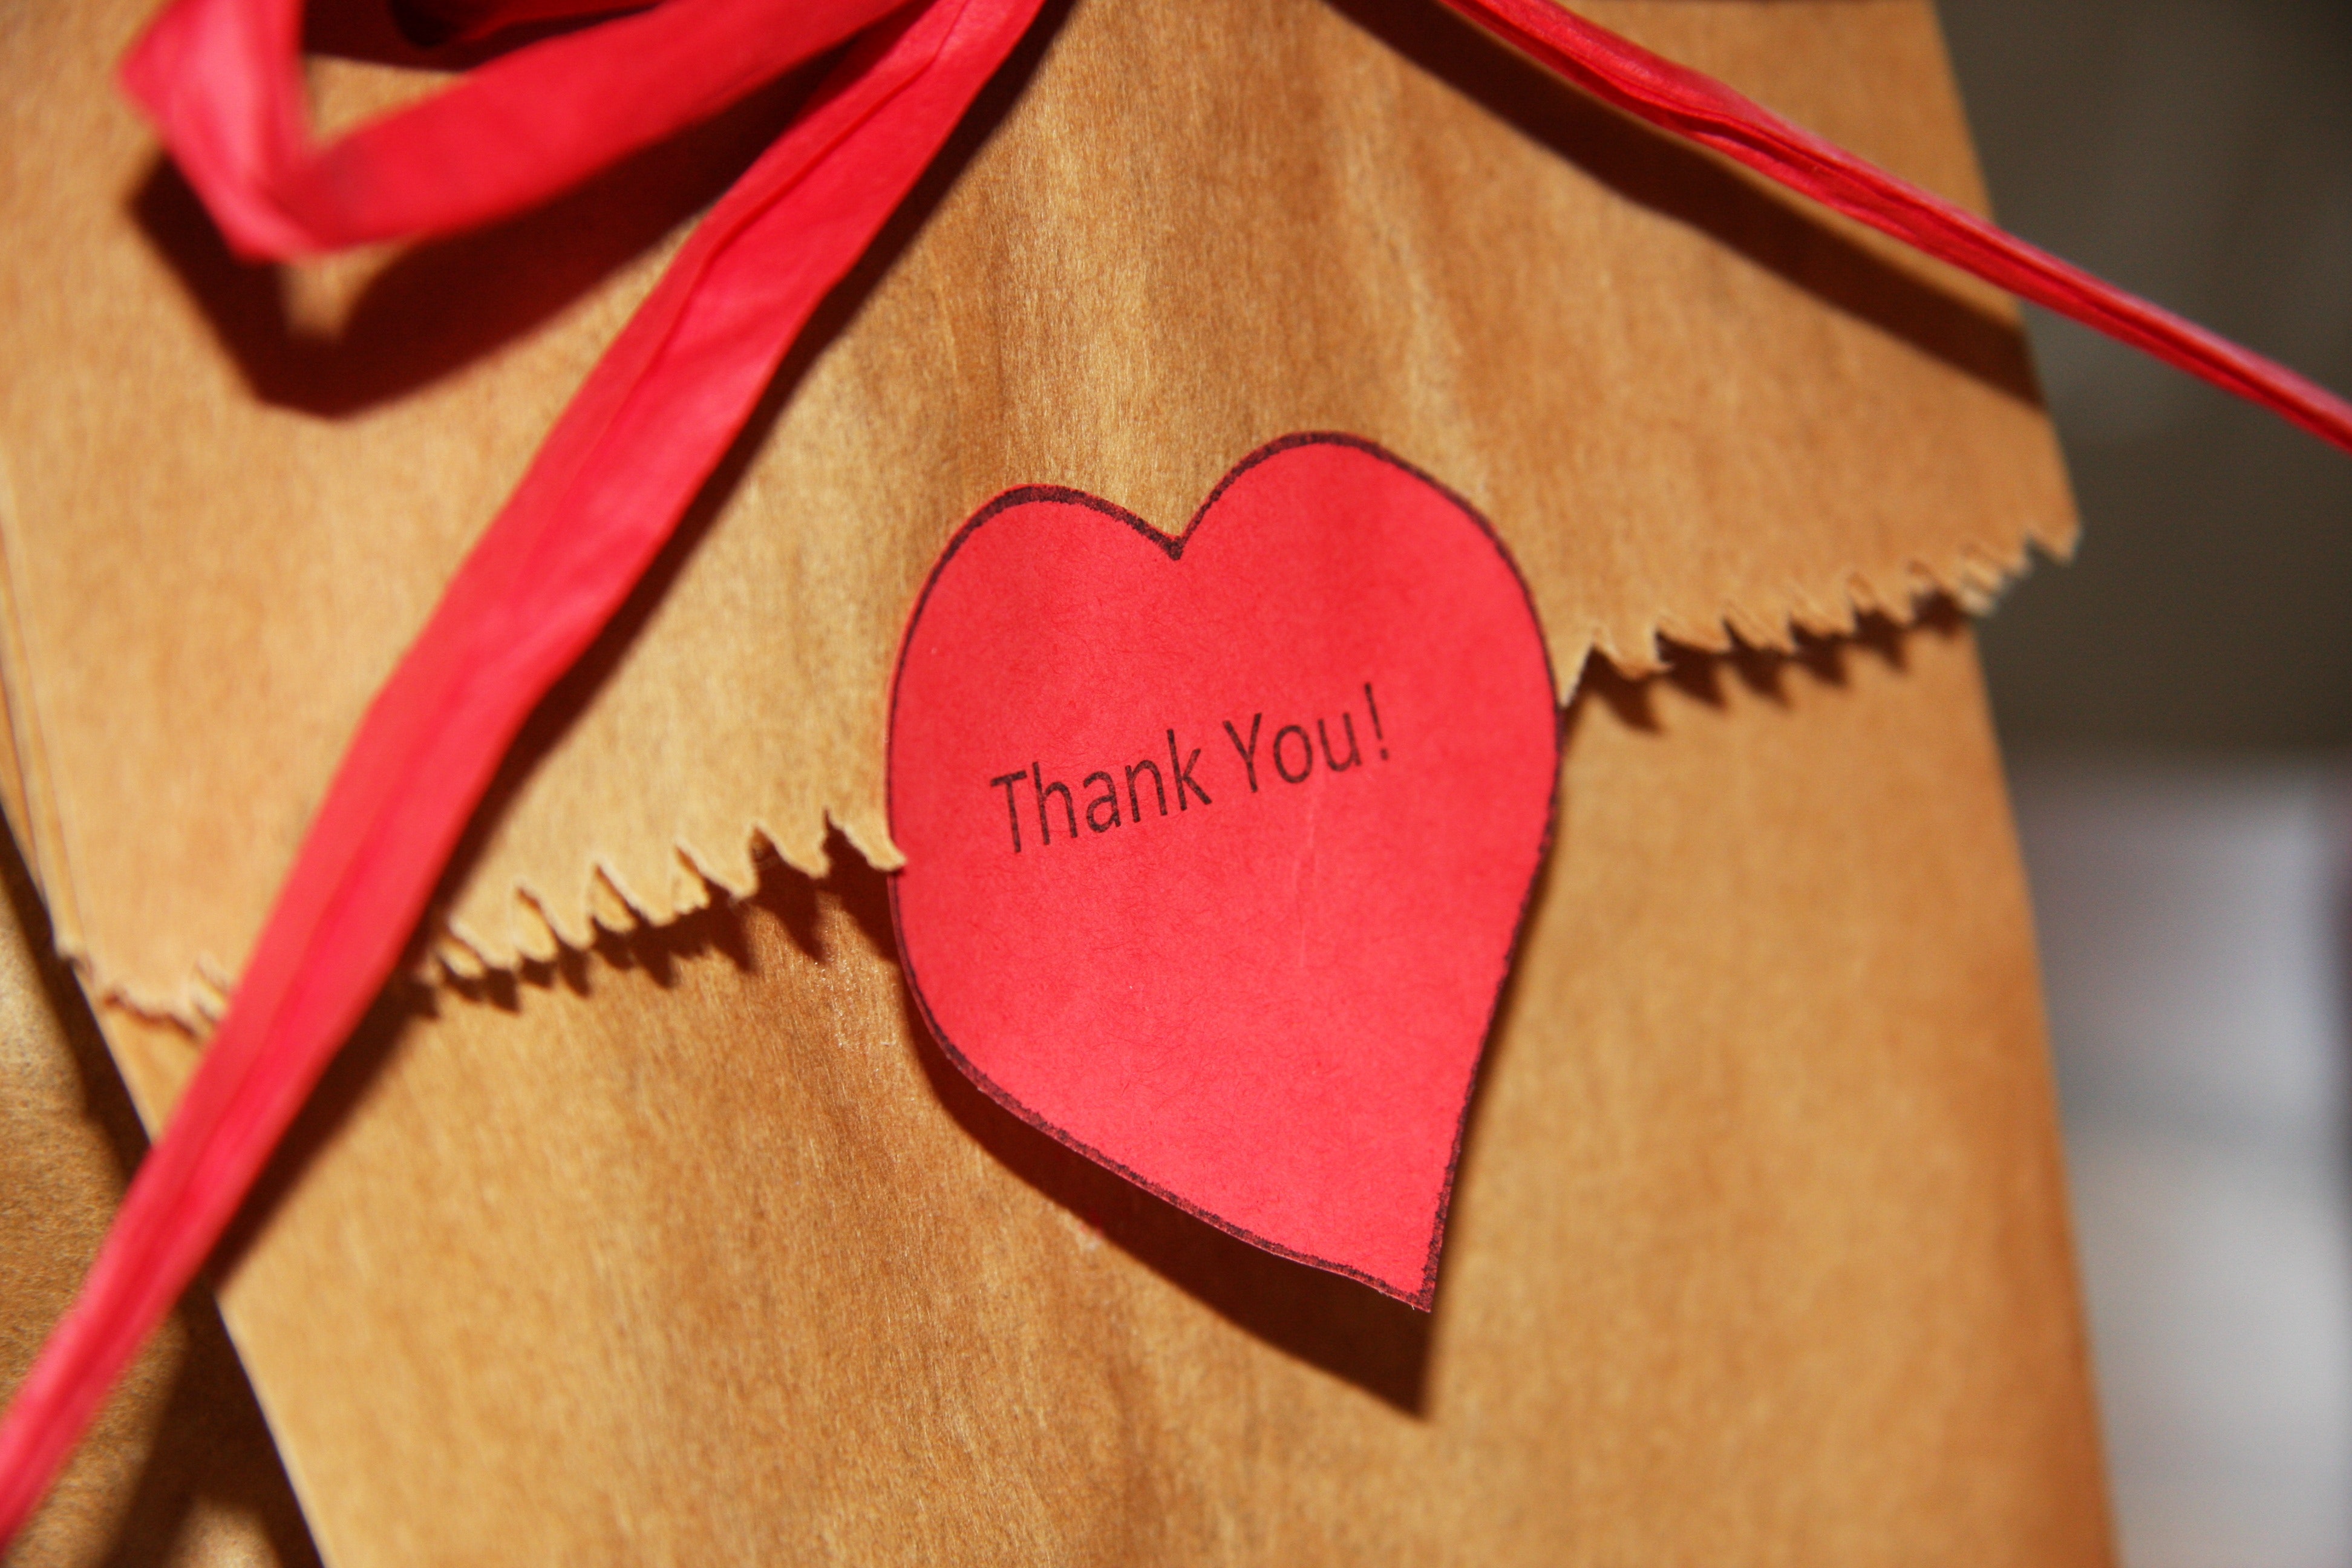 Employee Appreciation: 10 Simple Ways to Show Your Gratitude